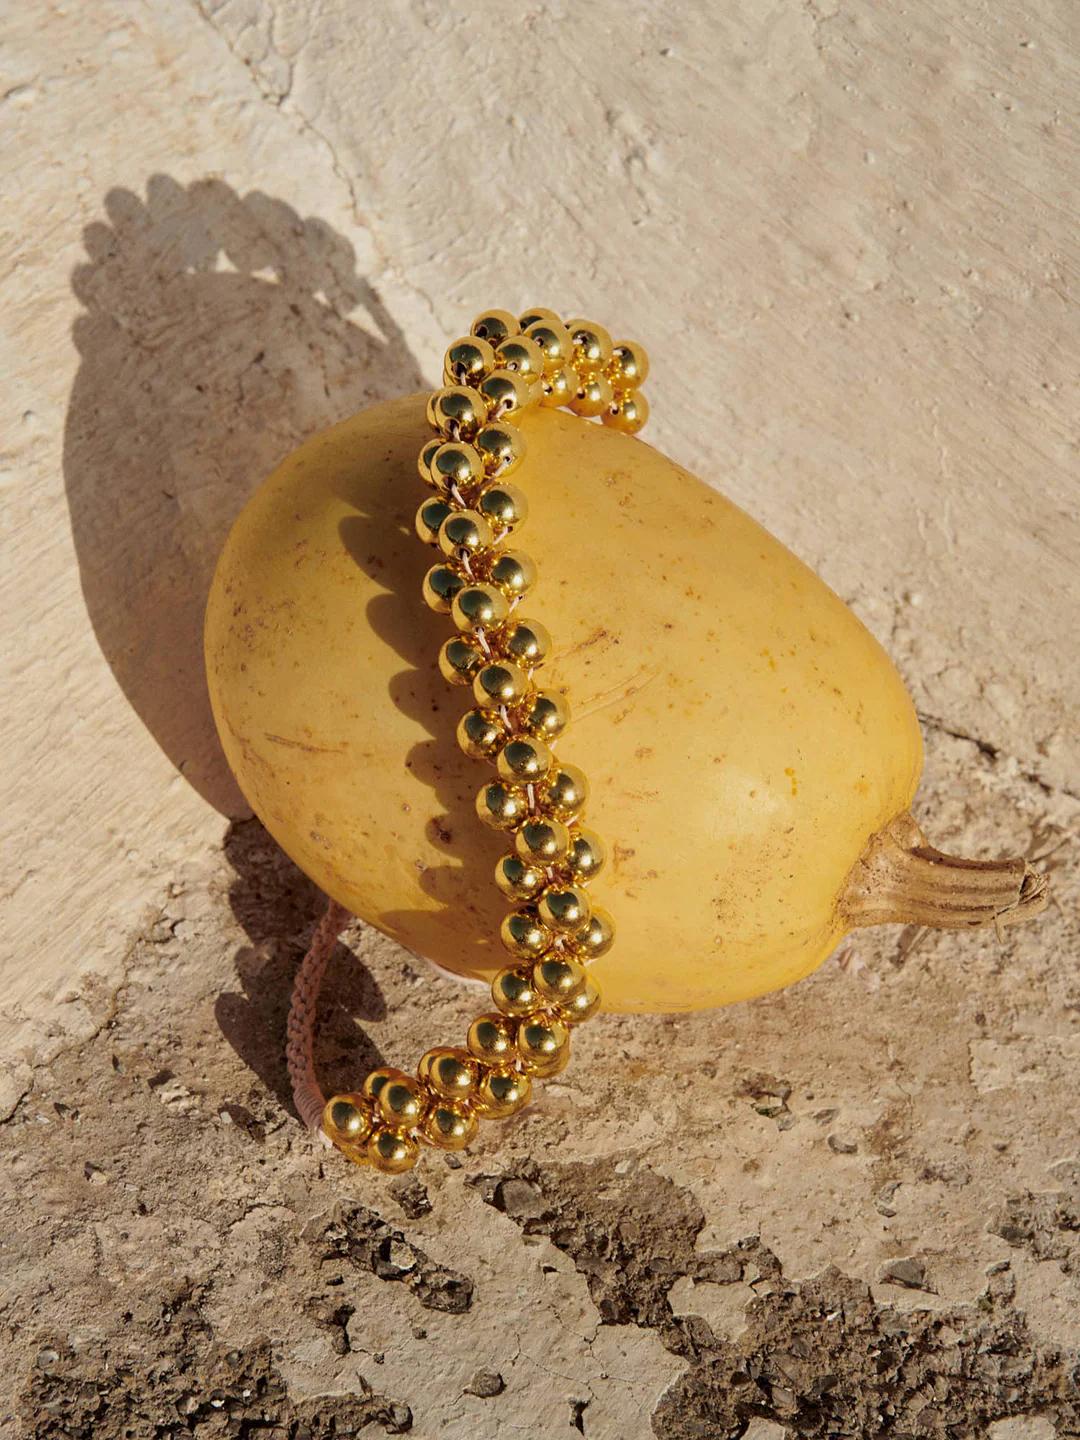 MANGO Gold-Toned Beaded Choker Necklace